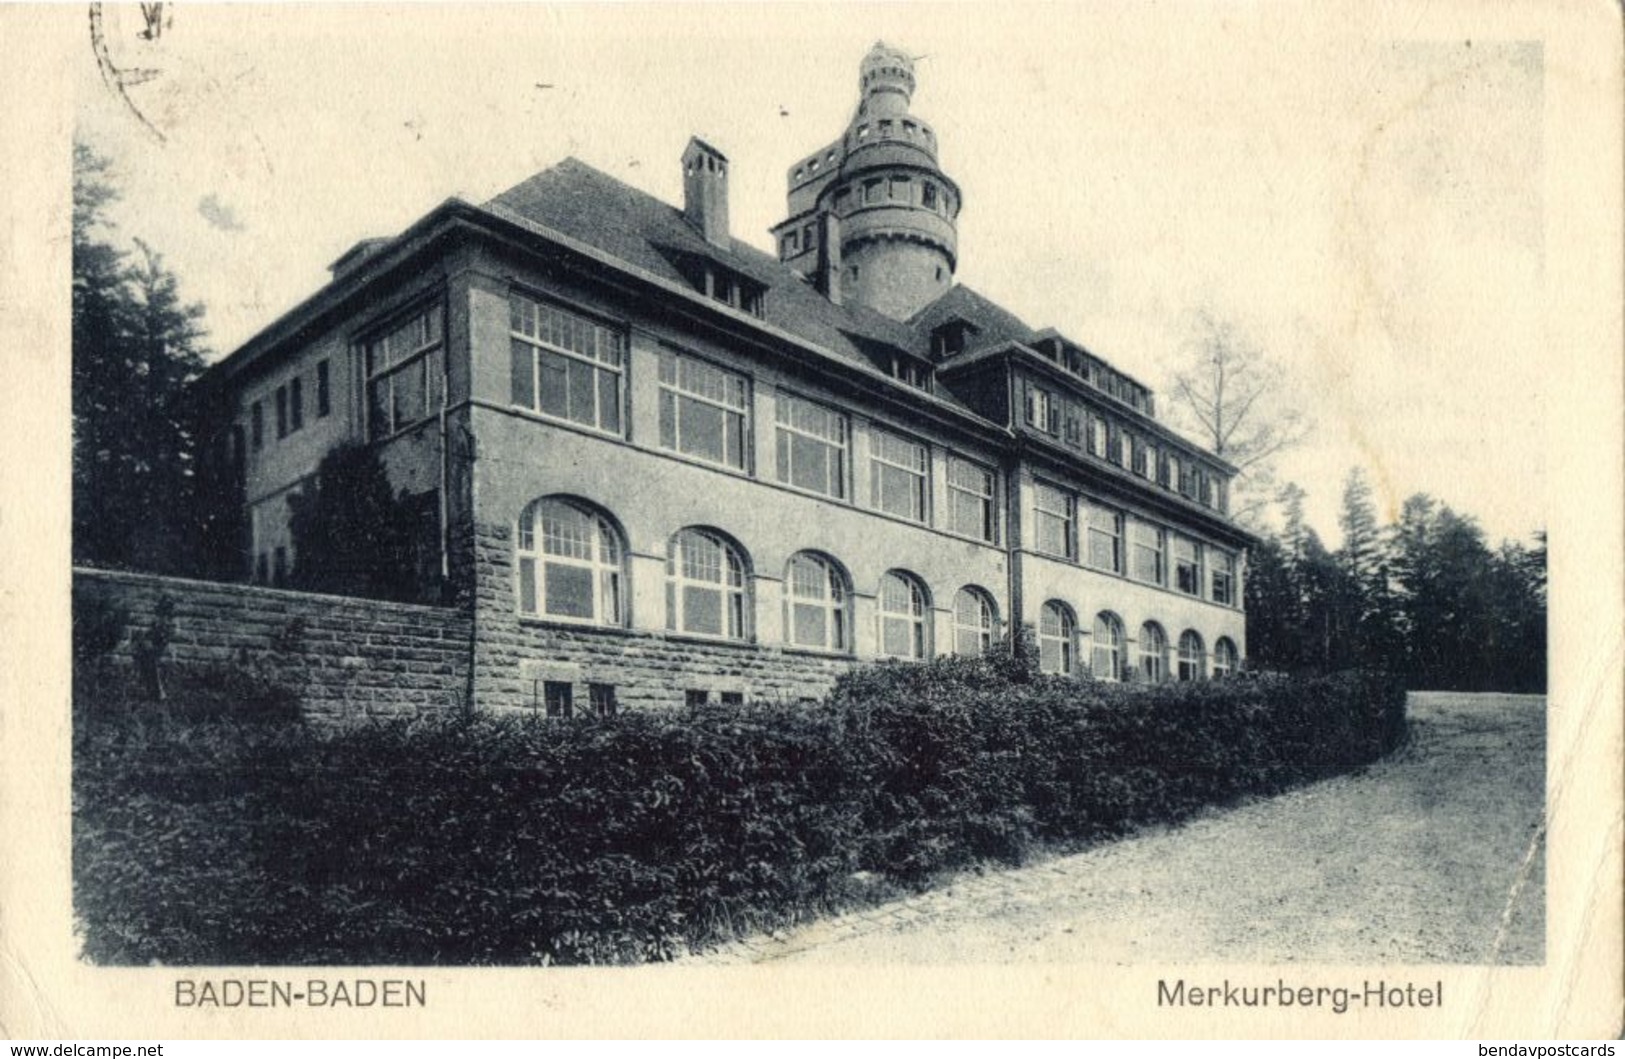 BADEN-BADEN, Merkurberg Hotel (1930s) AK - Baden-Baden